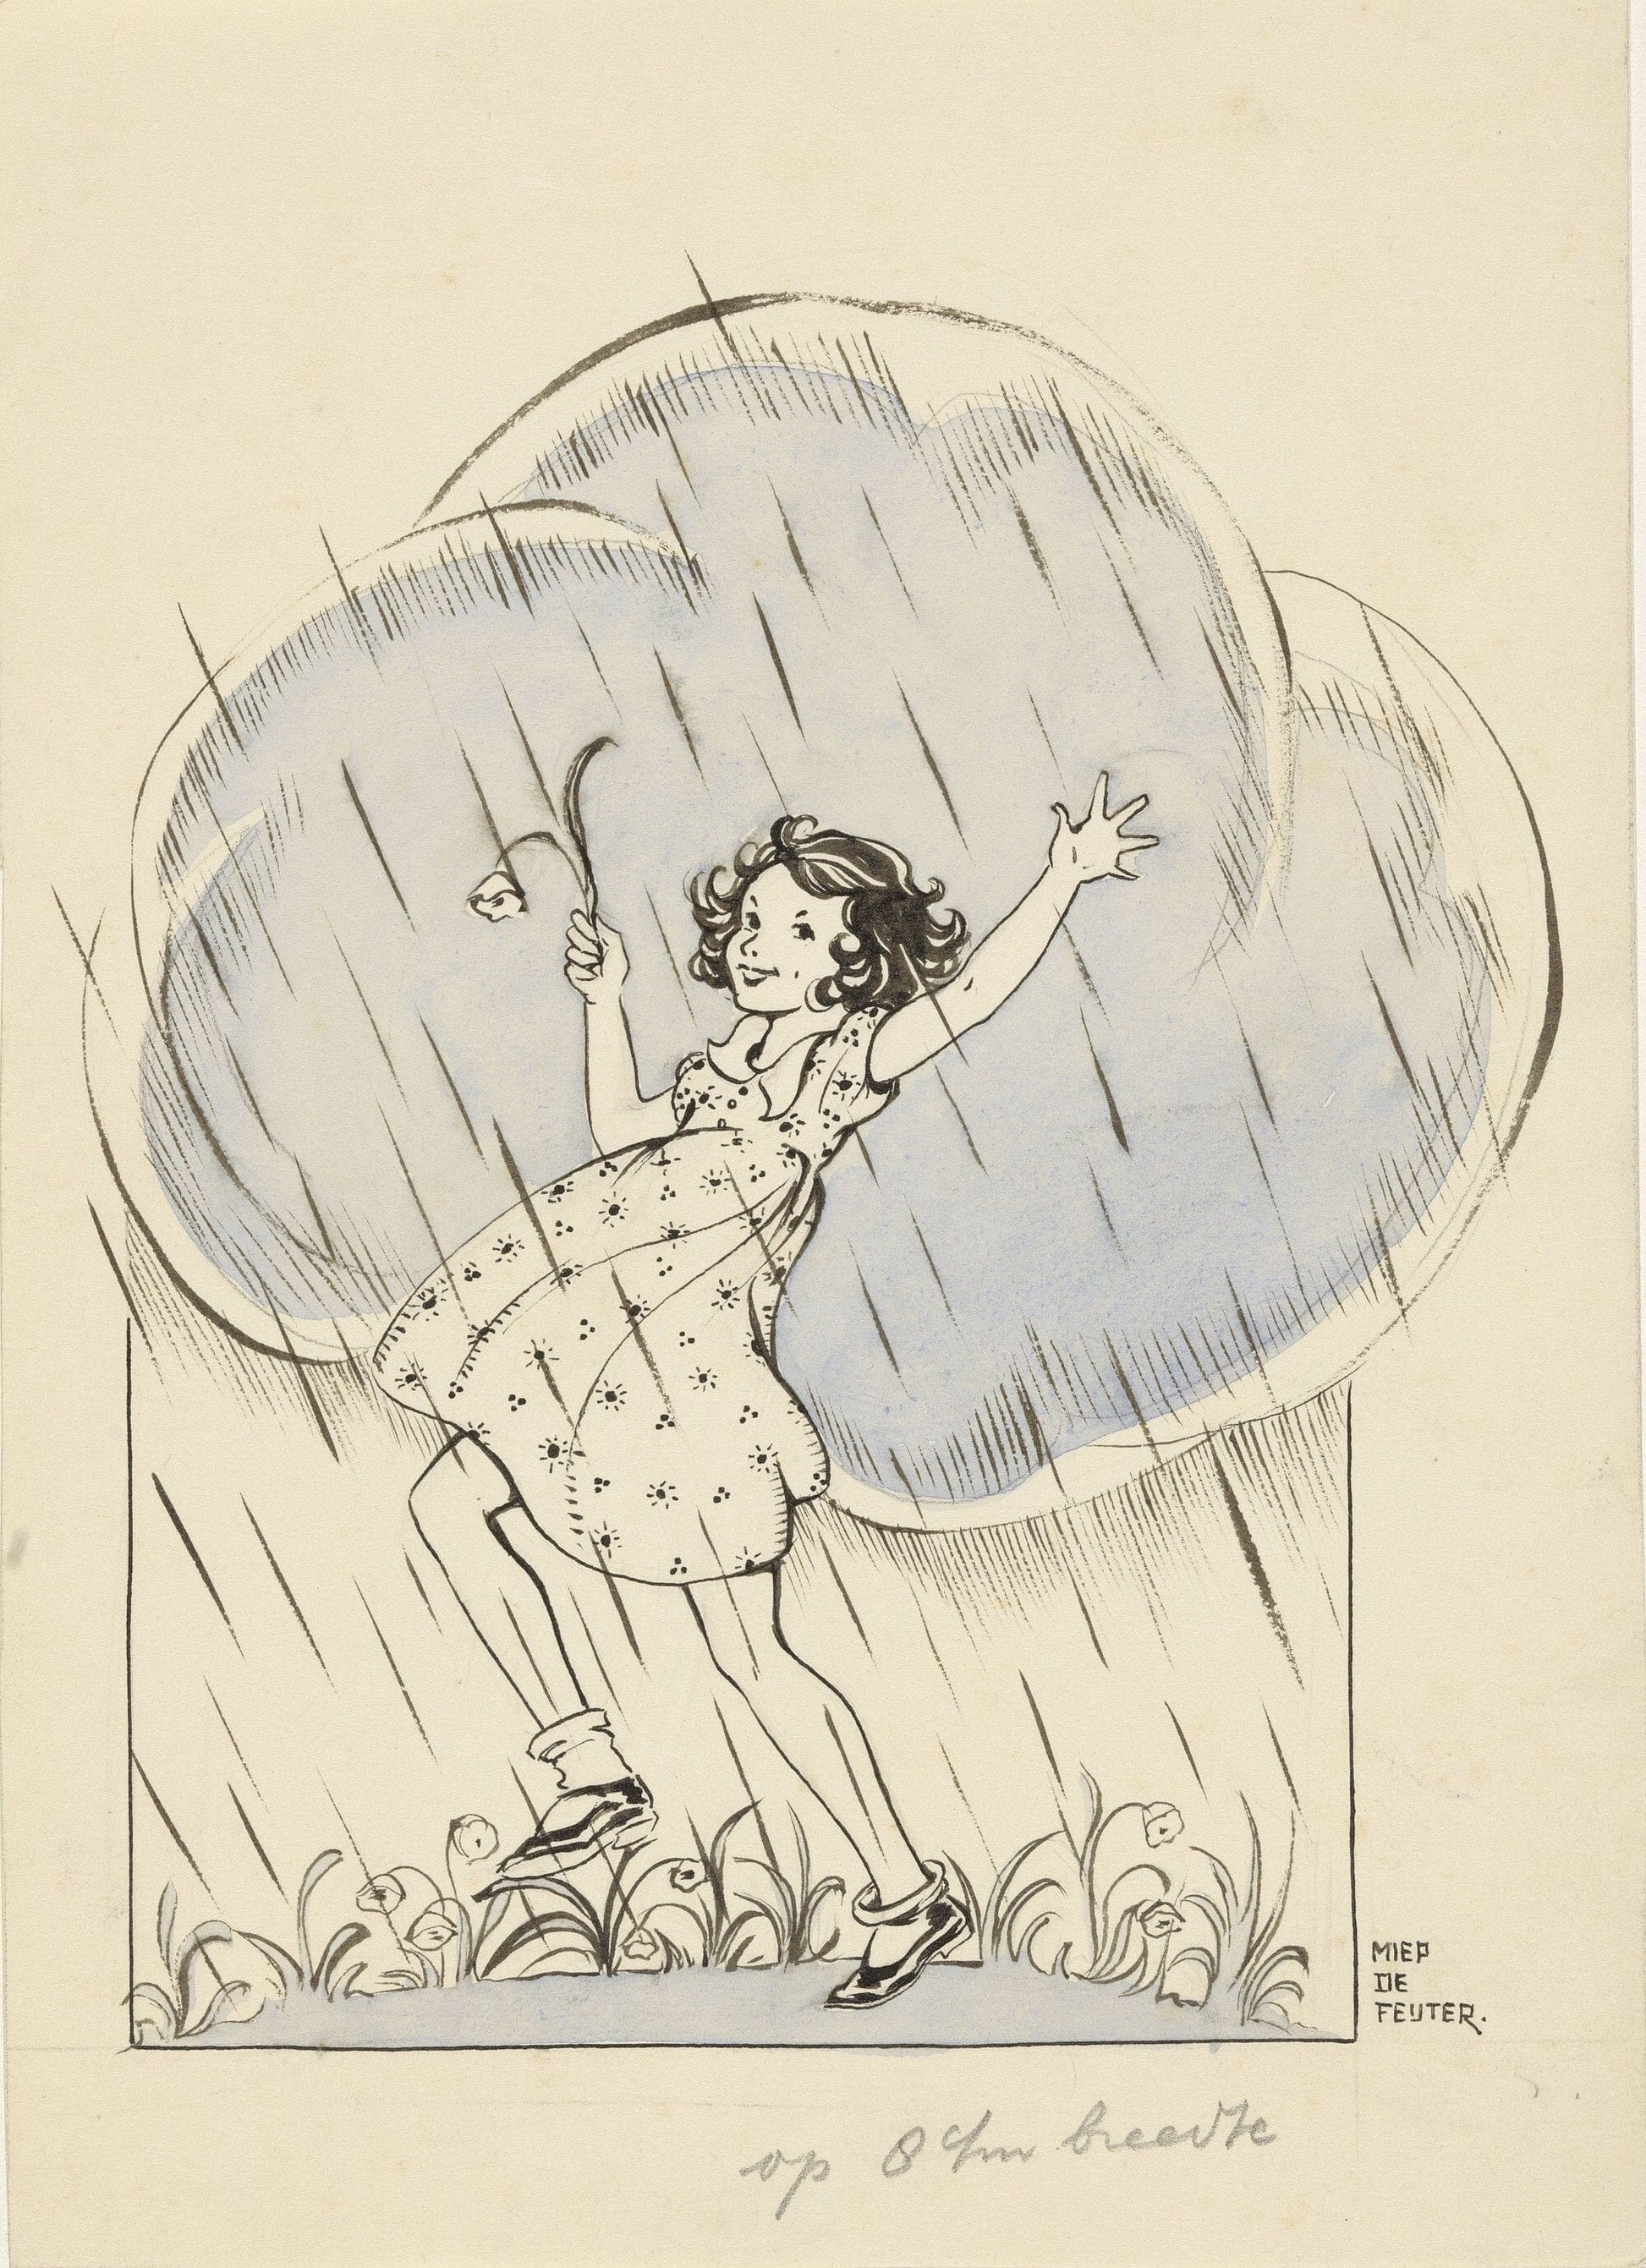 Dancing in the rain (1930s) | Vintage bathroom prints | Miep de Feijter Posters, Prints, & Visual Artwork The Trumpet Shop   